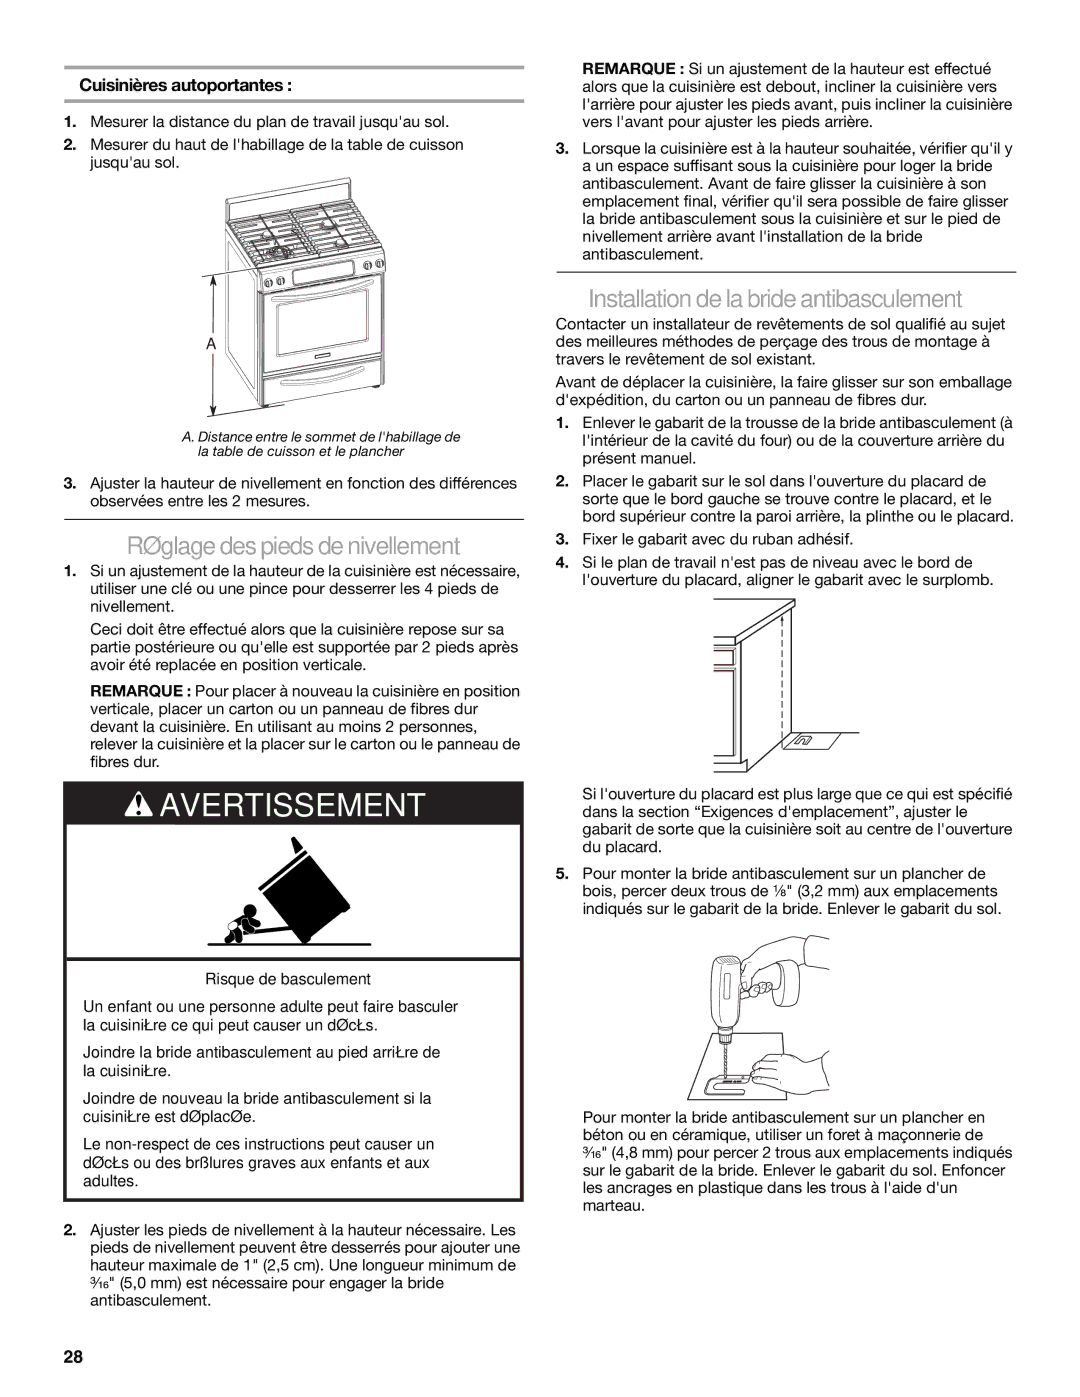 KitchenAid W10118262B installation instructions Réglage des pieds denivellement, Installation dela brideantibasculement 